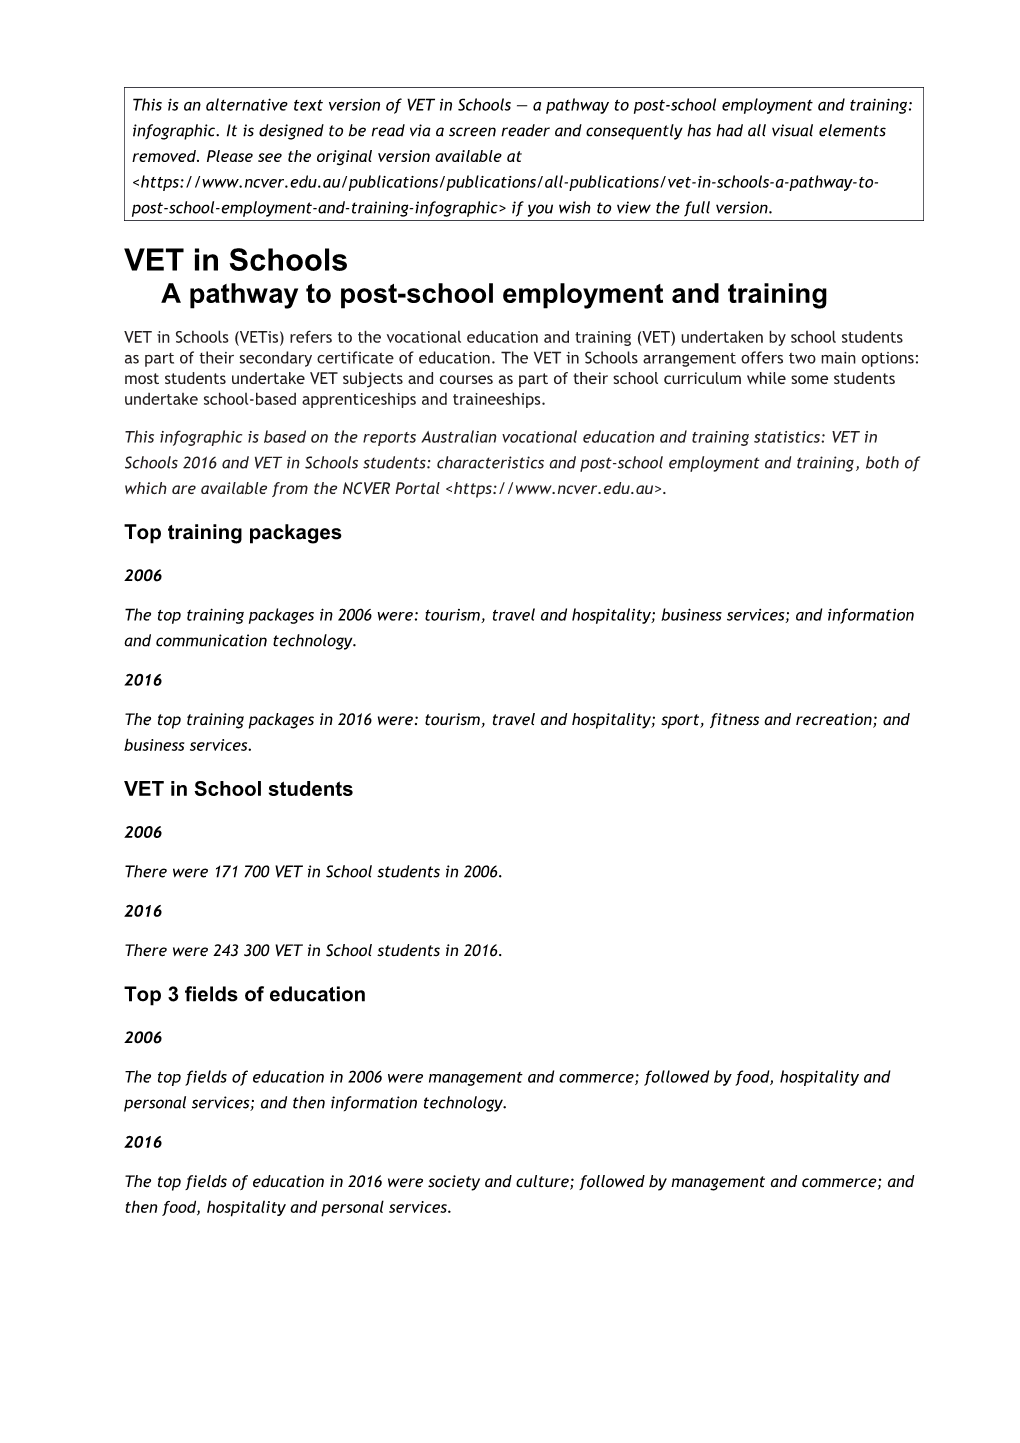 VET in Schoolsa Pathway to Post-School Employment and Training